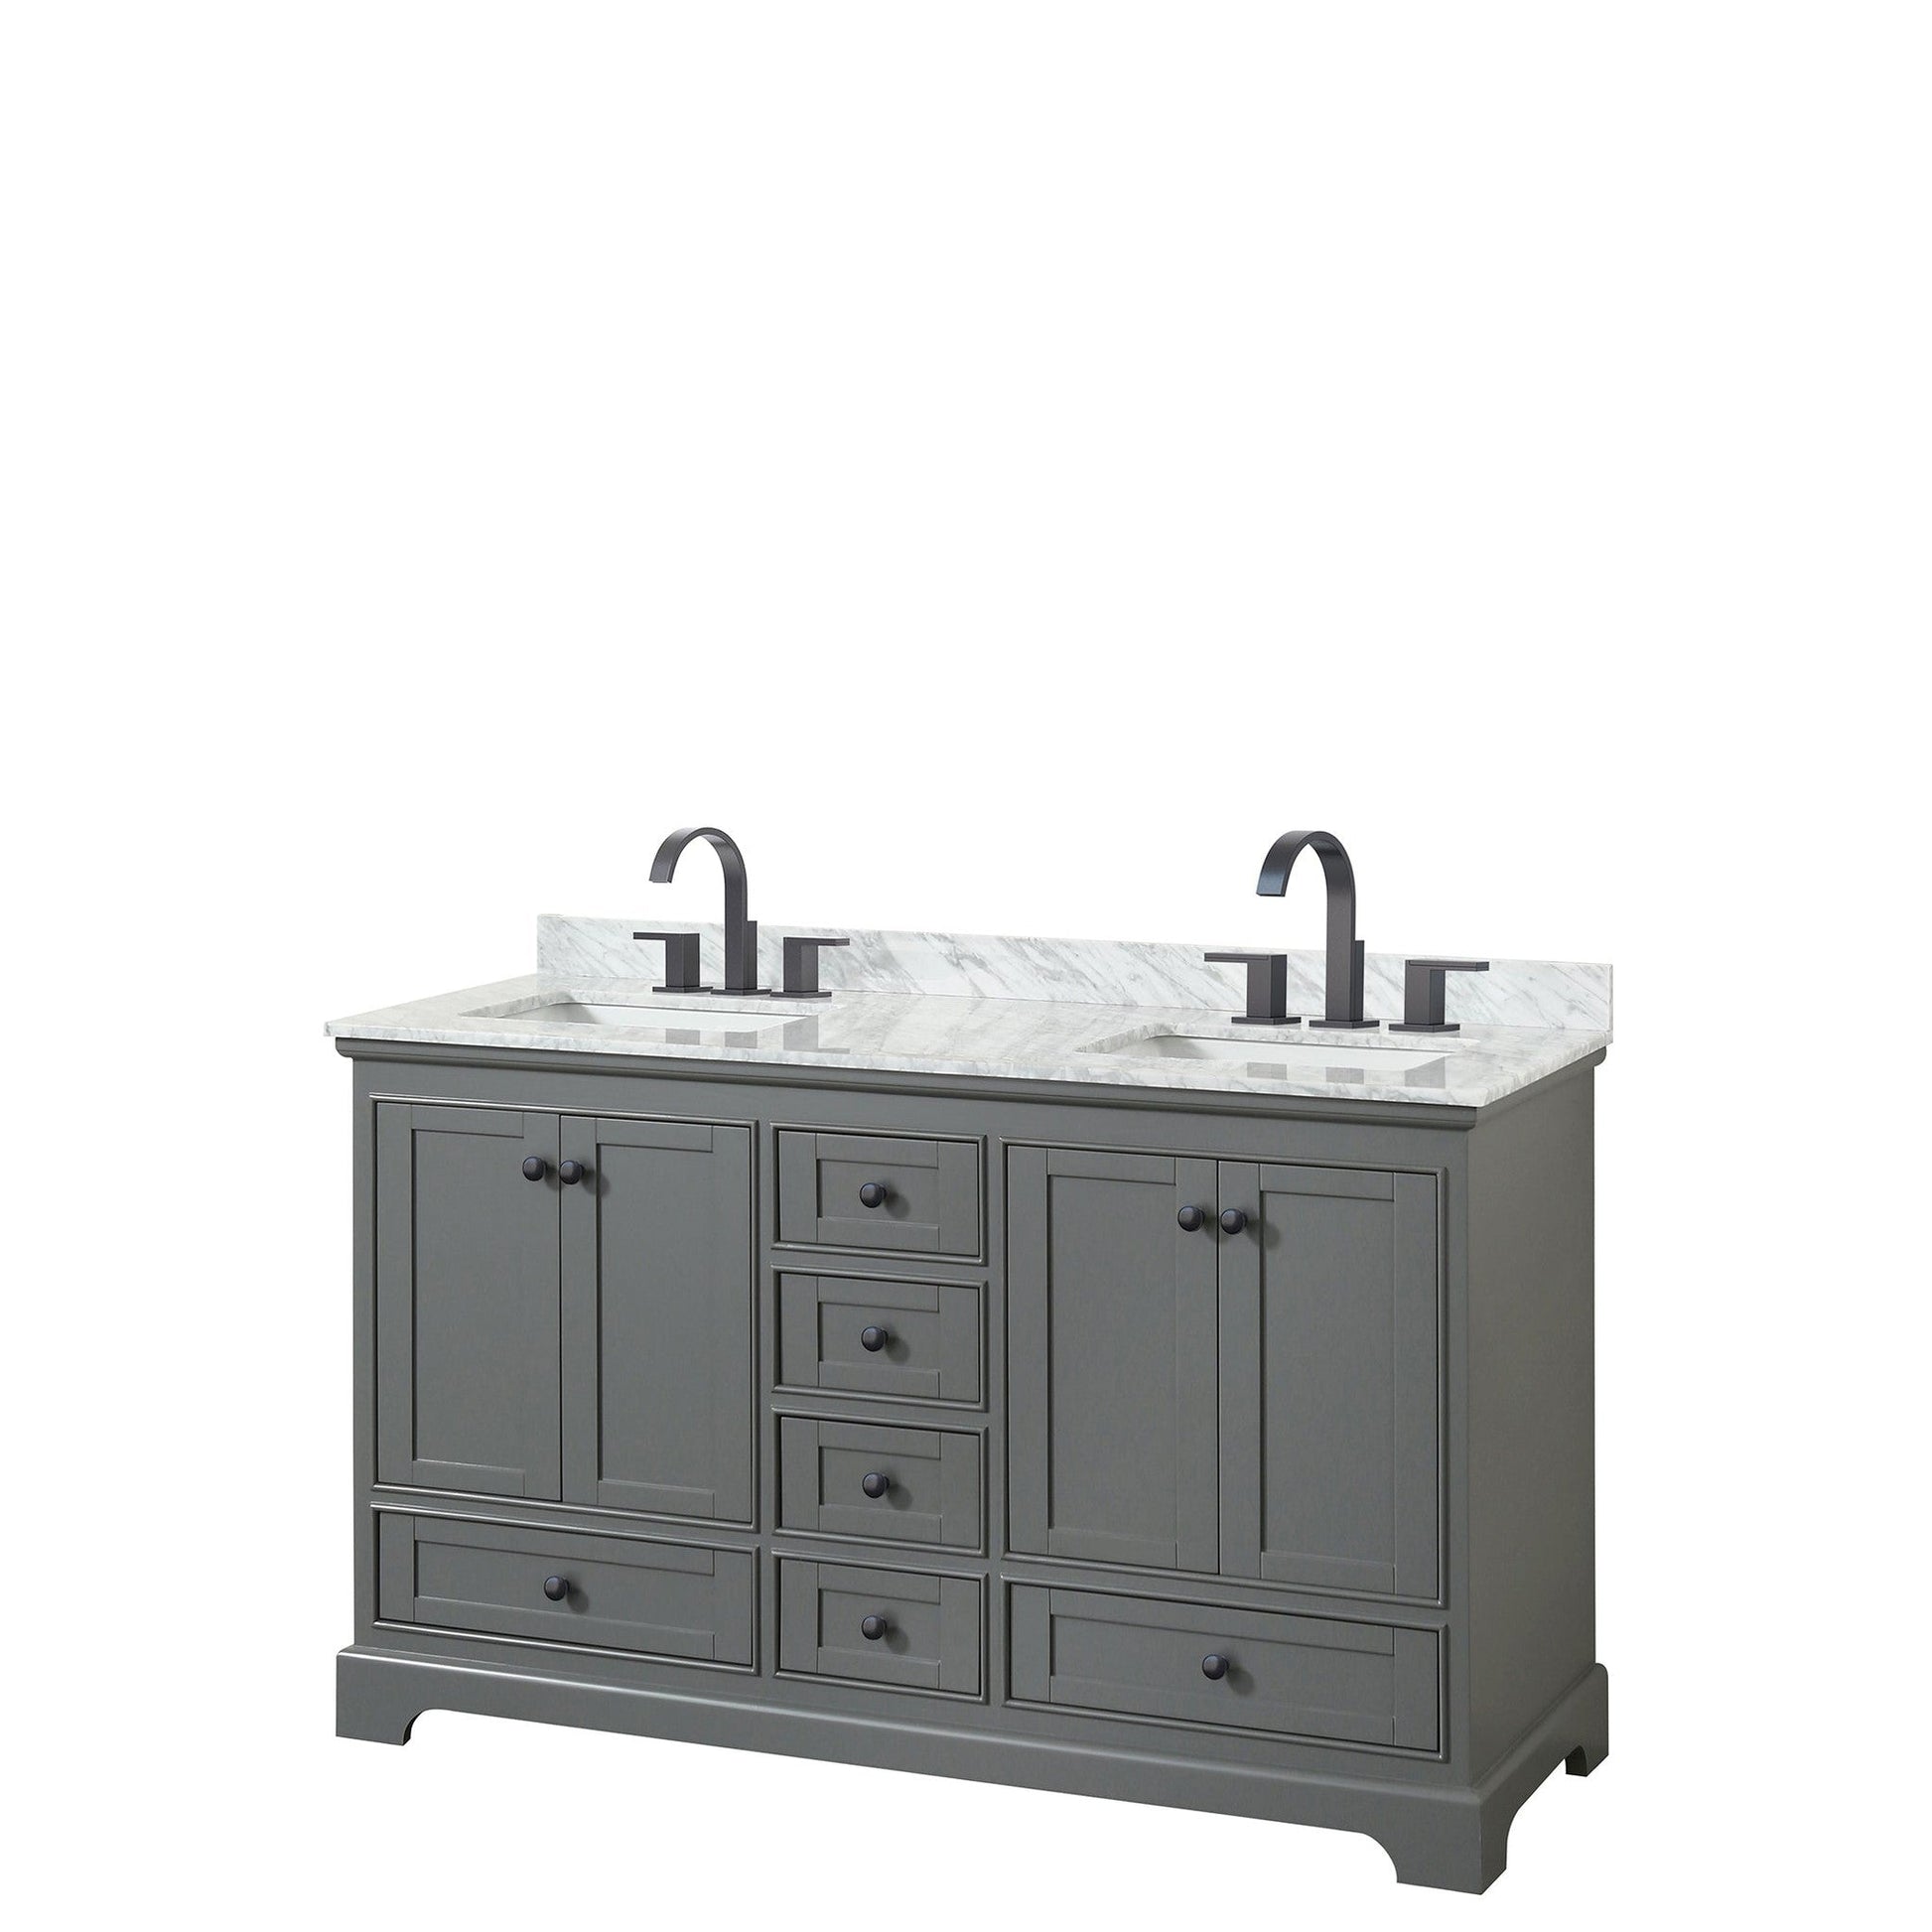 Deborah 60" Double Bathroom Vanity in Dark Gray, White Carrara Marble Countertop, Undermount Square Sinks, Matte Black Trim